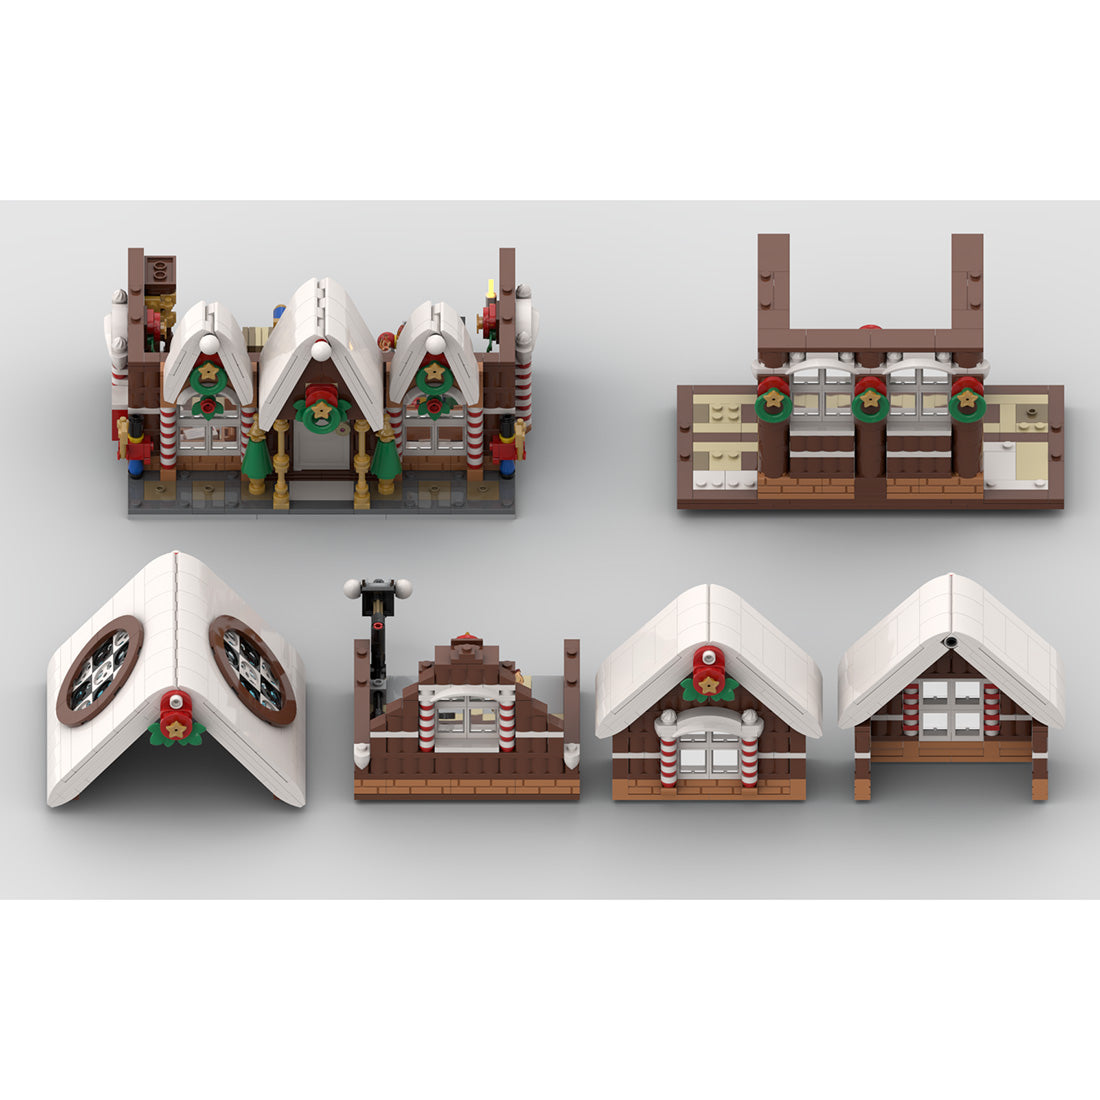 Christmas Snow Gingerbread House Model